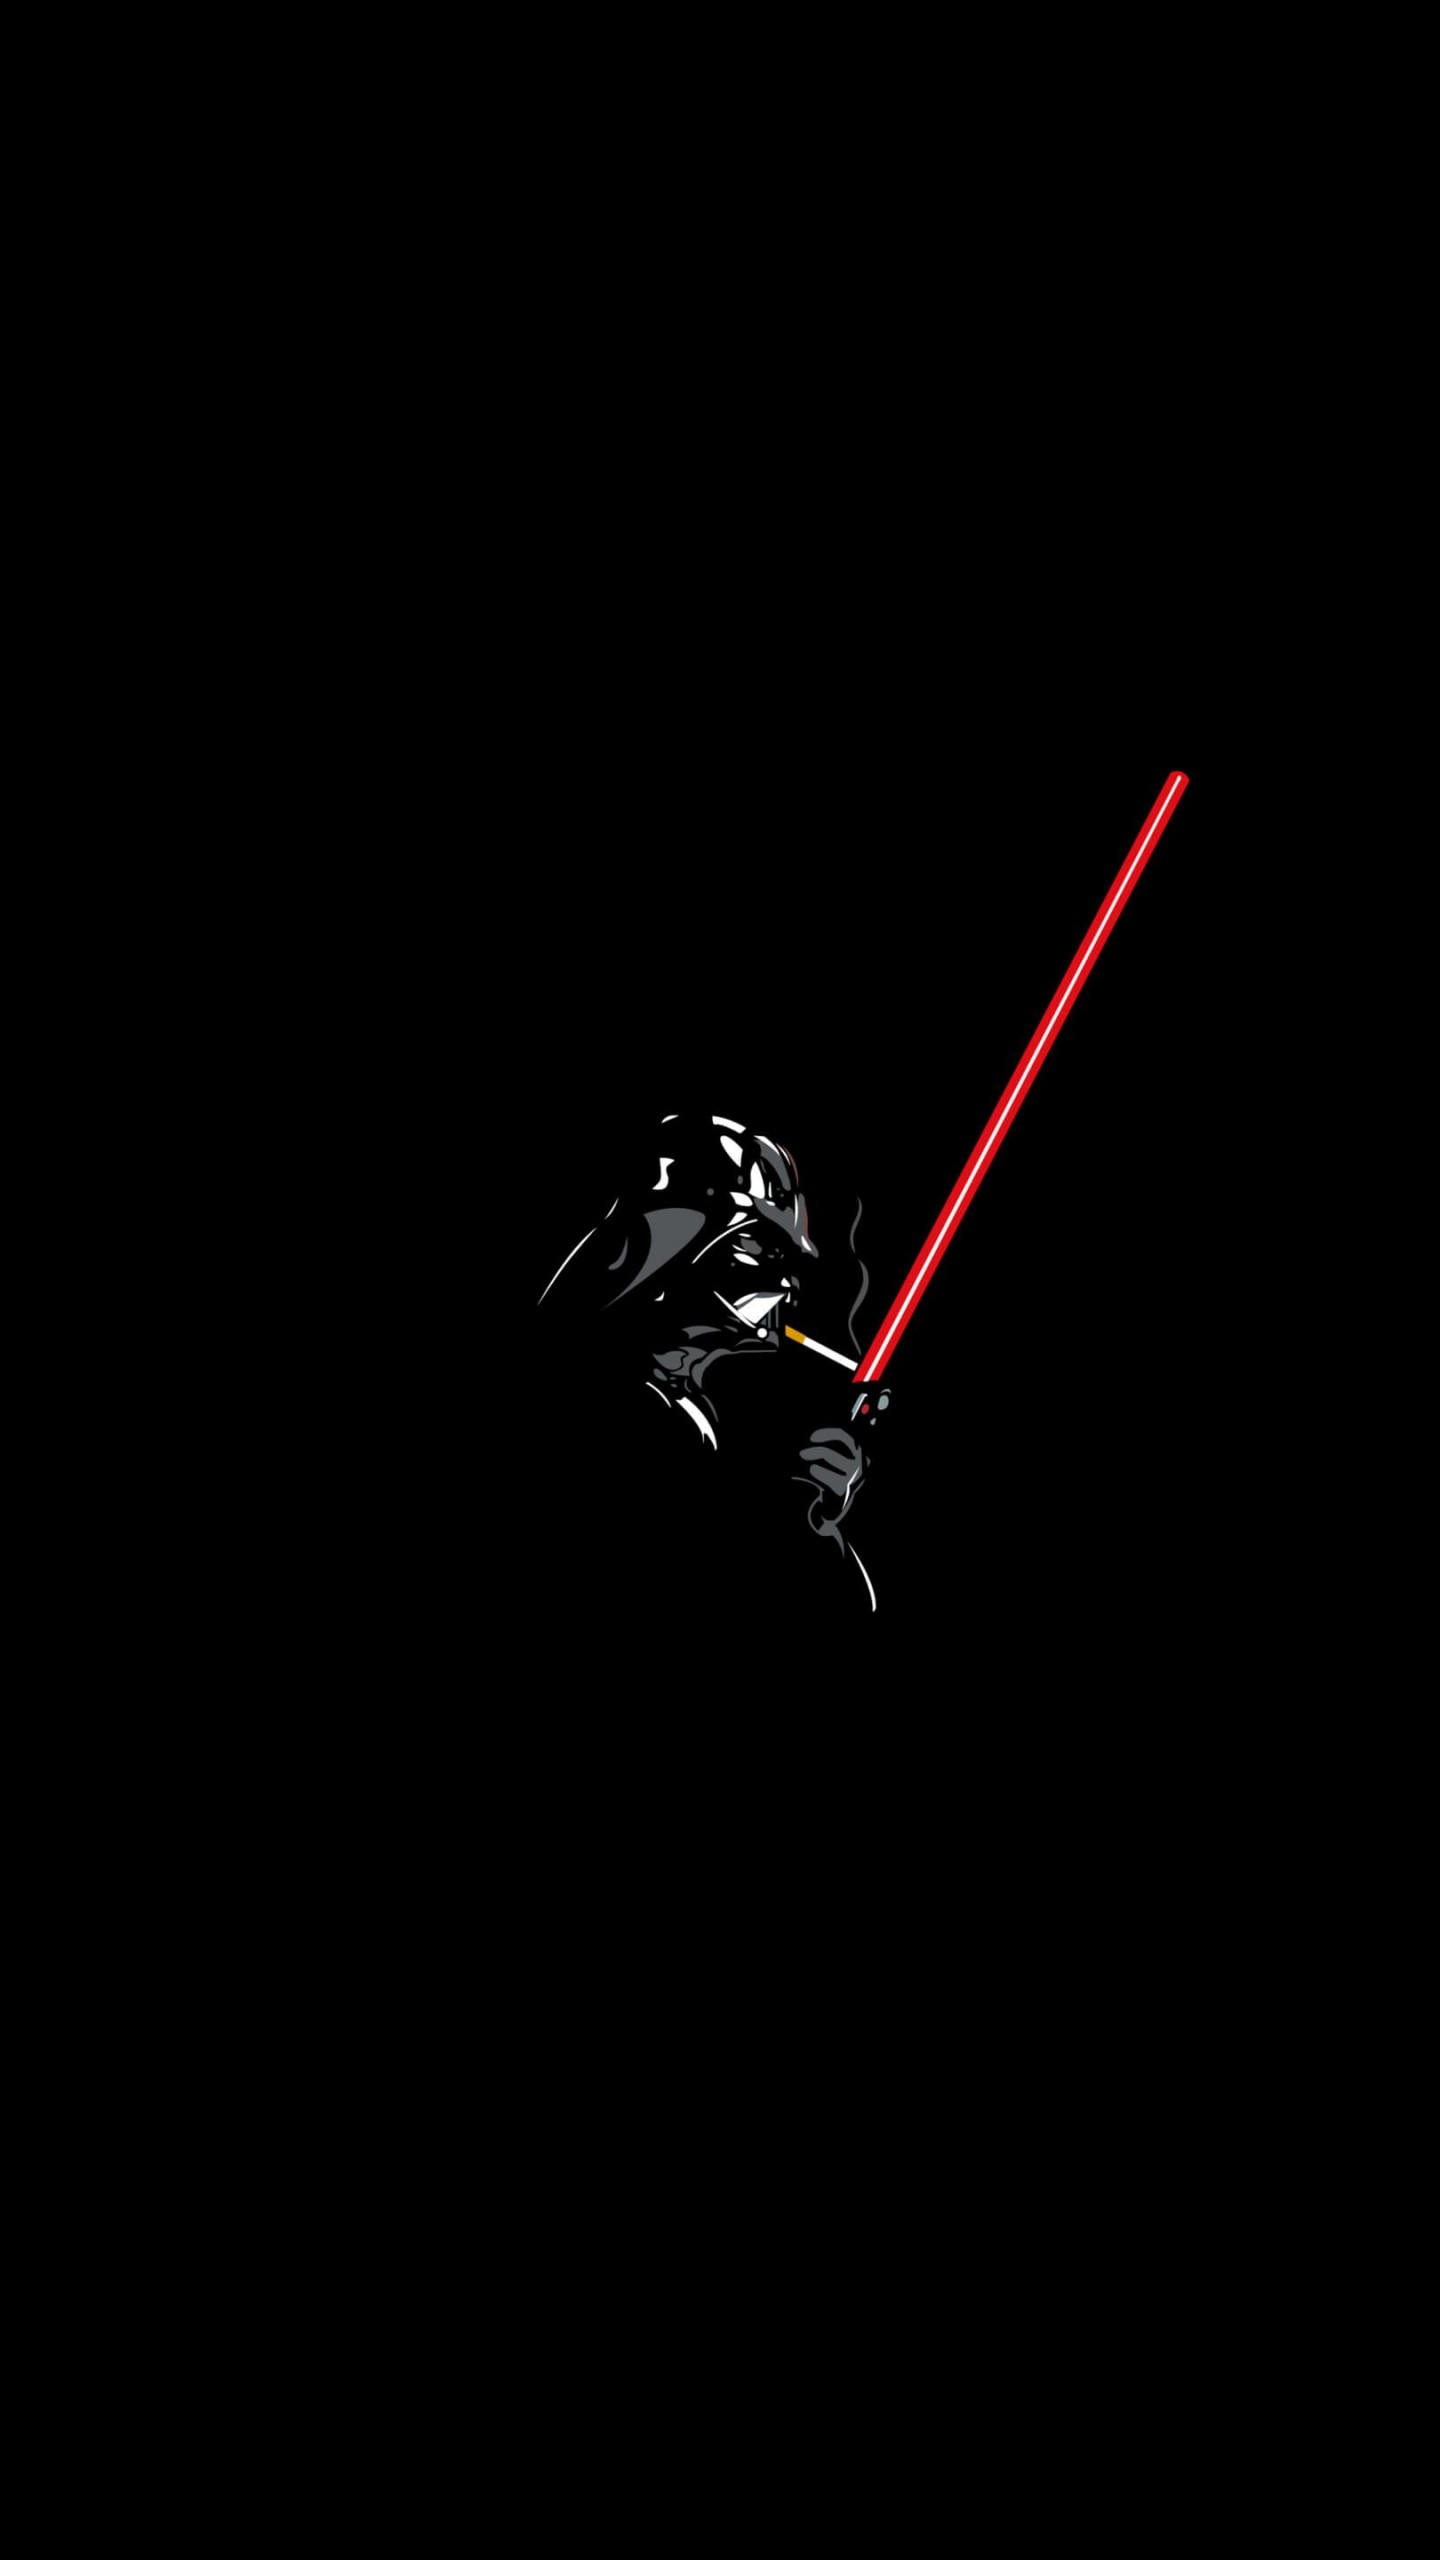 Darth Vader Lighting a Cigarette Wallpaper for SAMSUNG Galaxy Note 4